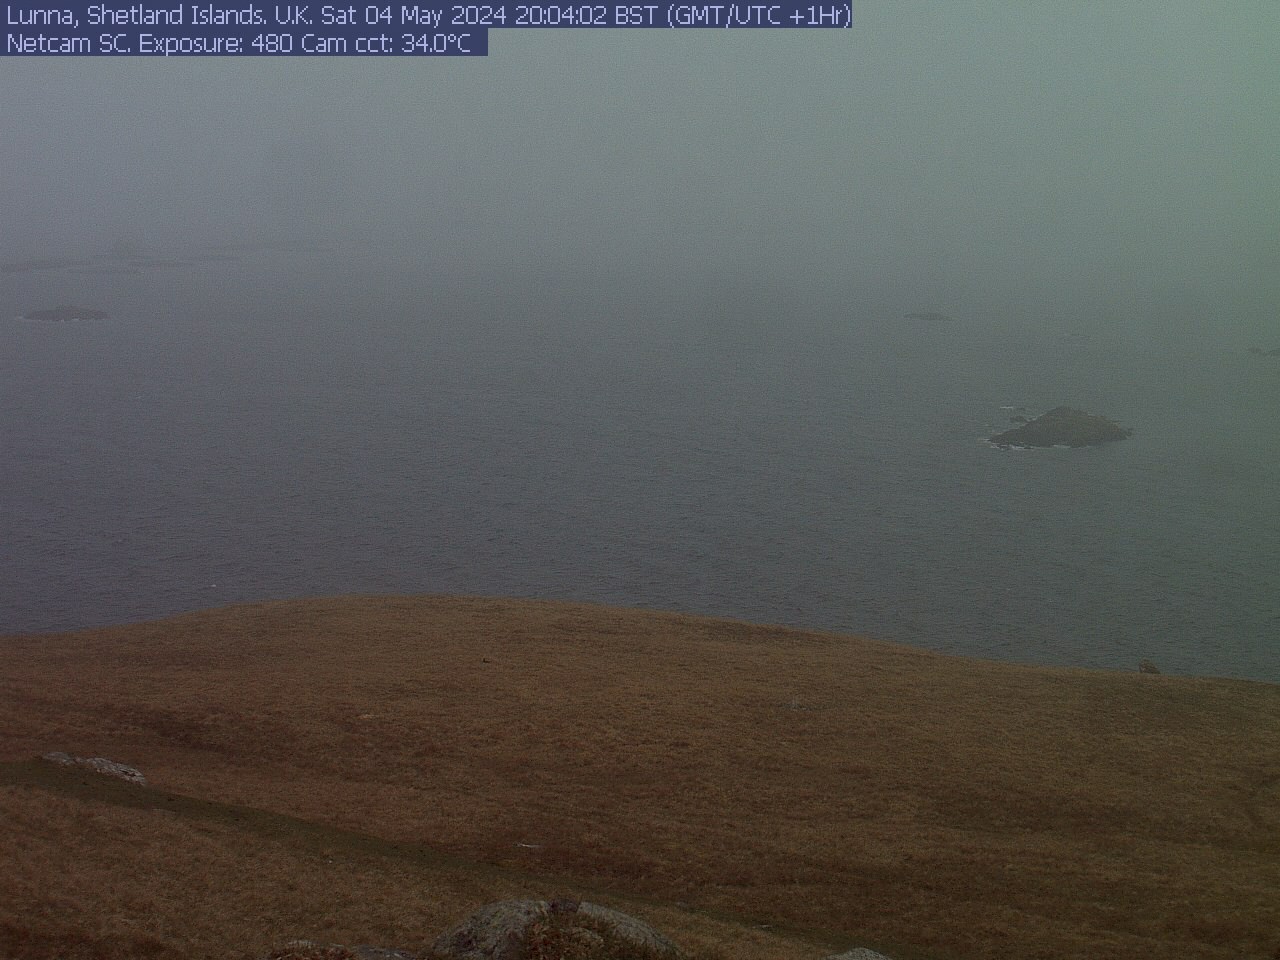 (Lunna House, Shetland - Webcam Image)